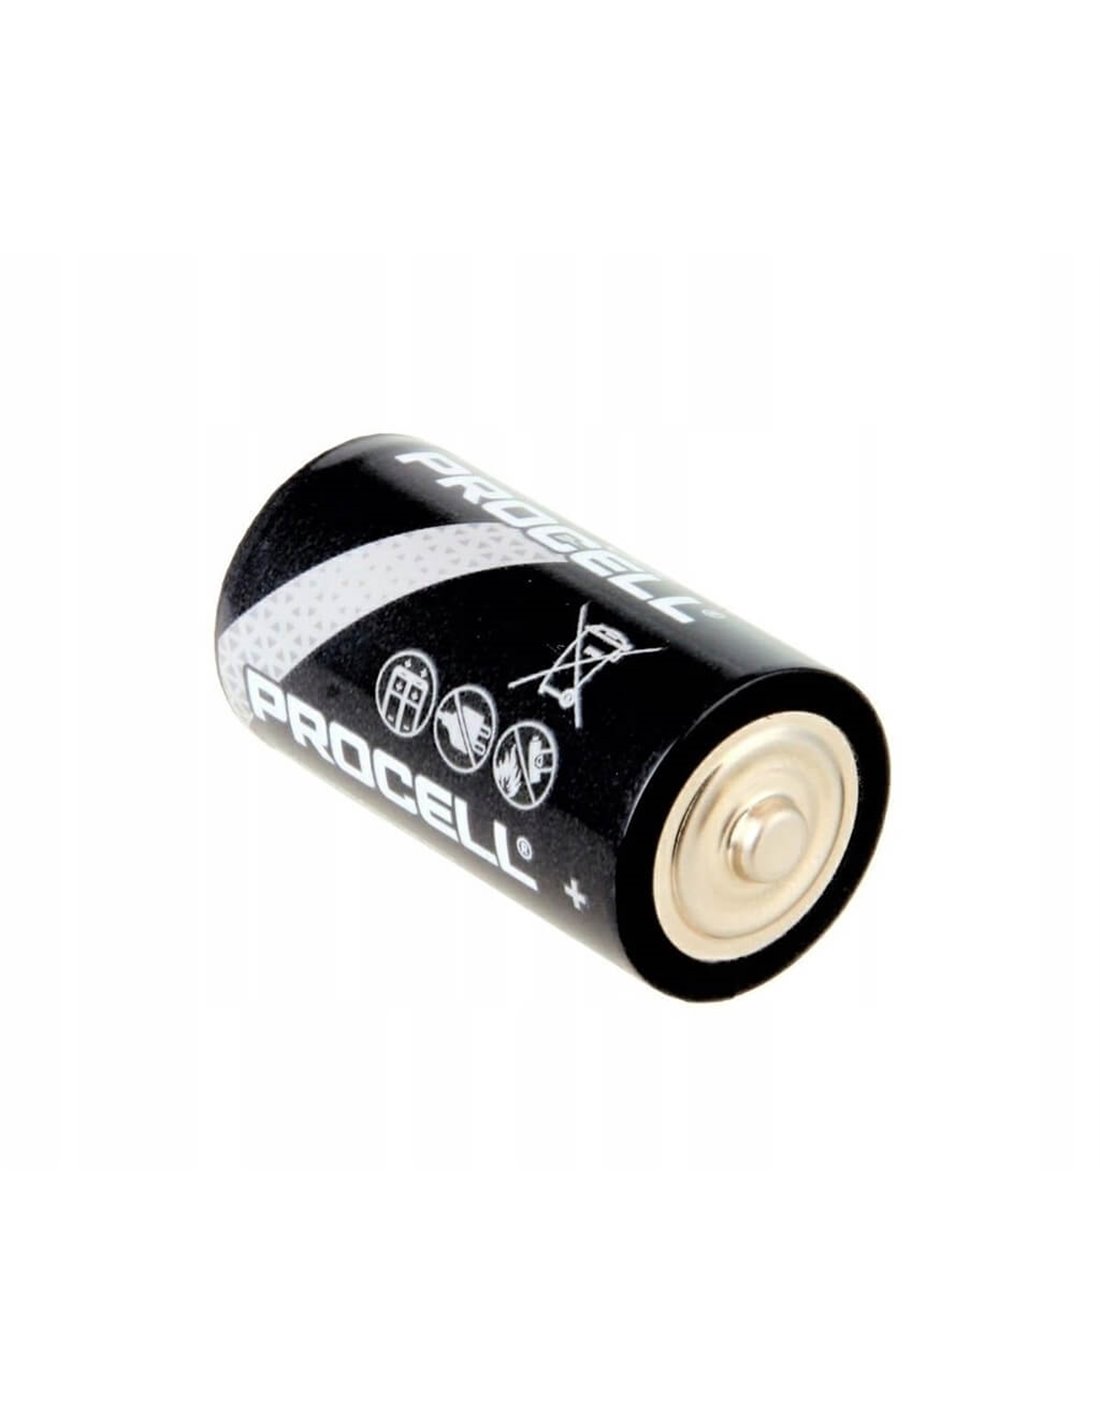 Duracell C Procell Alkaline Batteries model PC1400 - Non Rechargeable